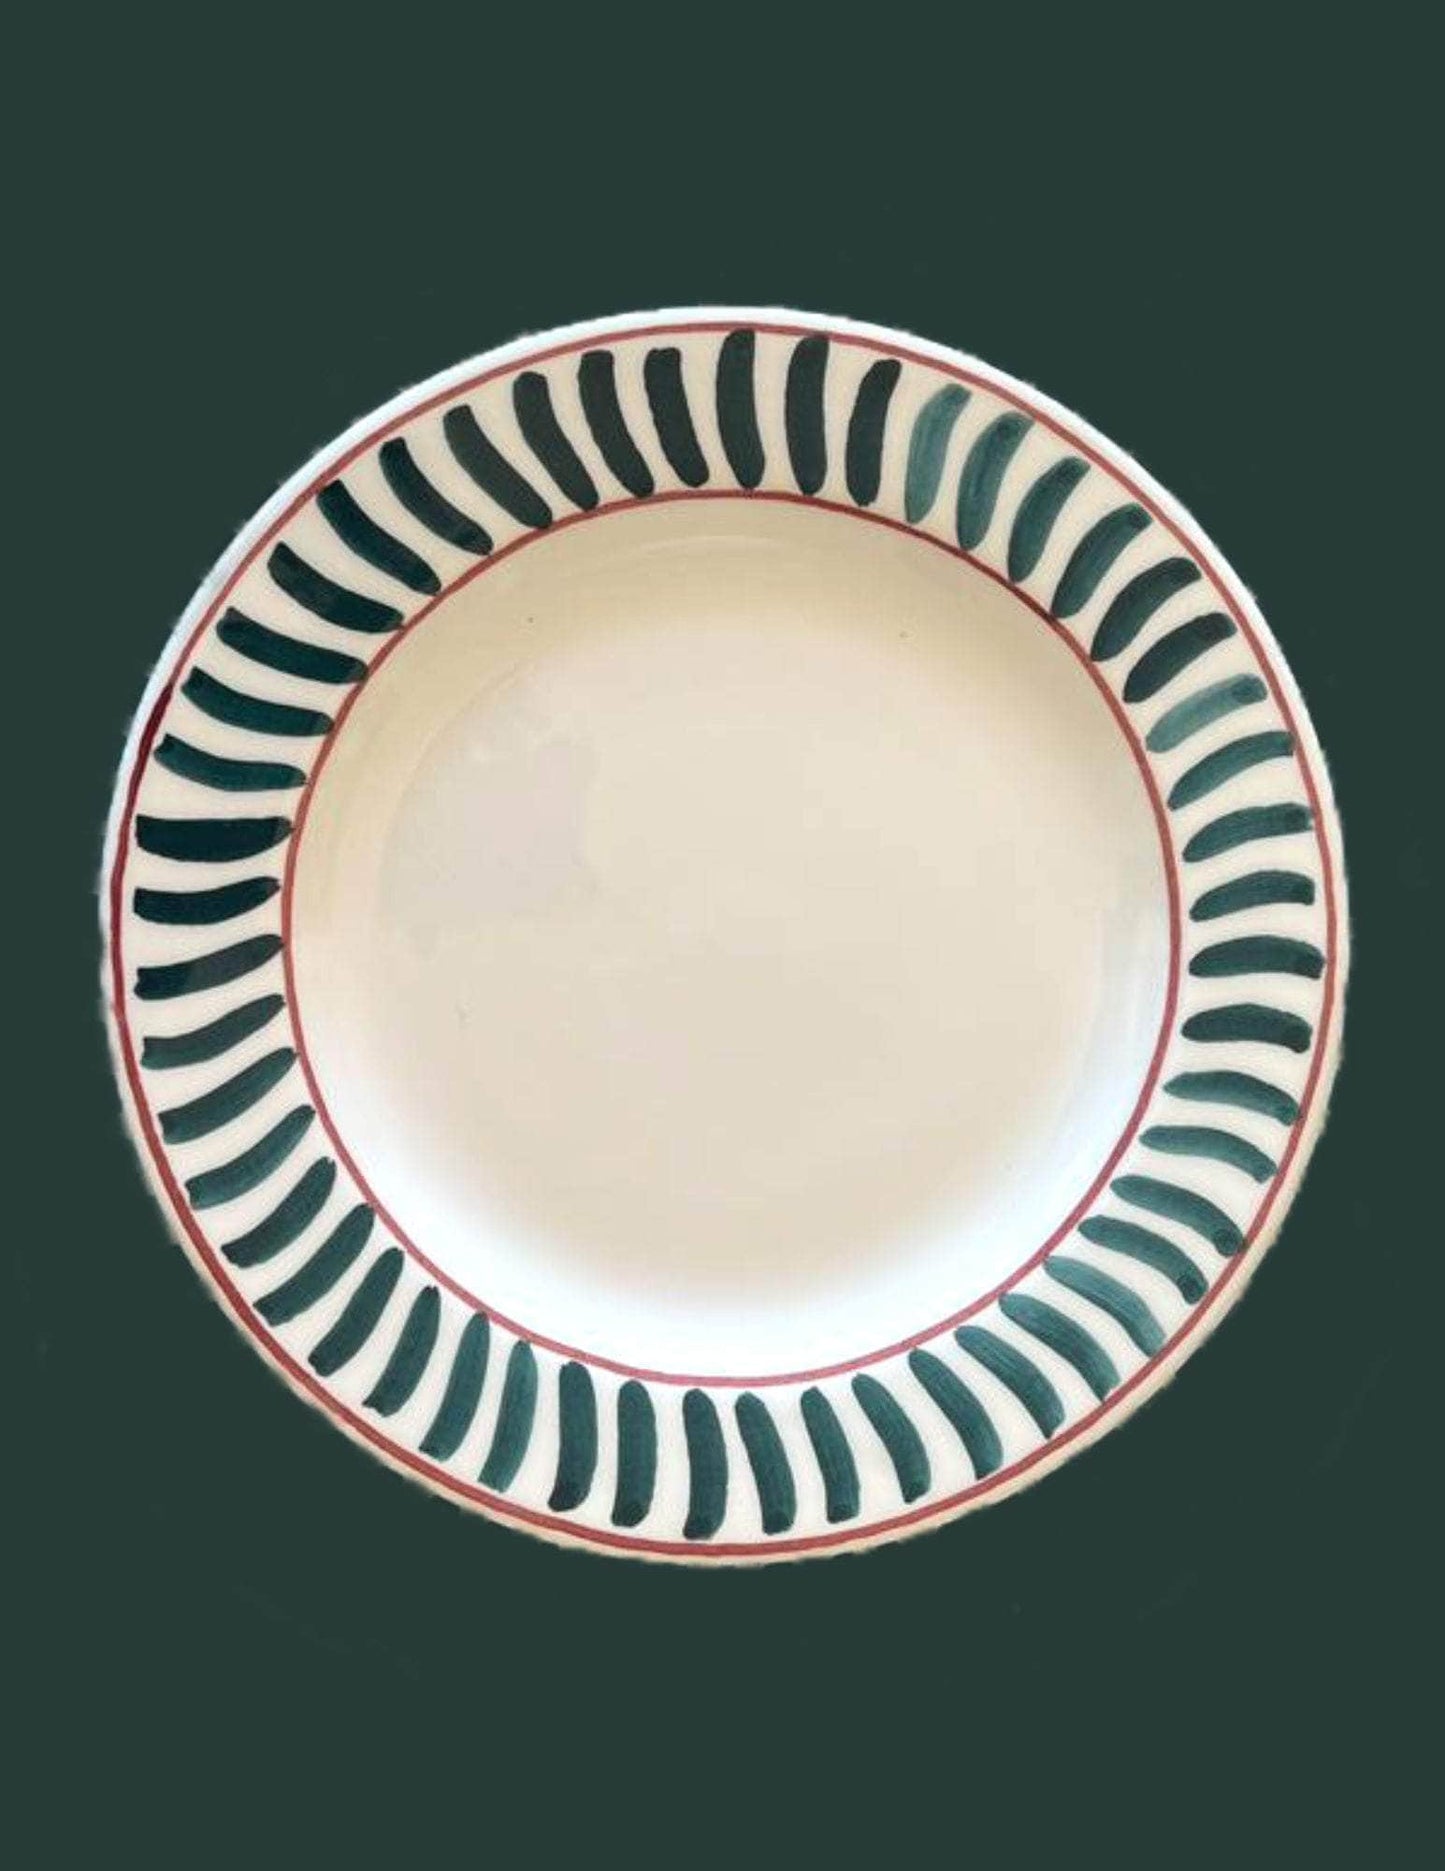 Ceramic Emerald Green Dining Plate | Set of 12